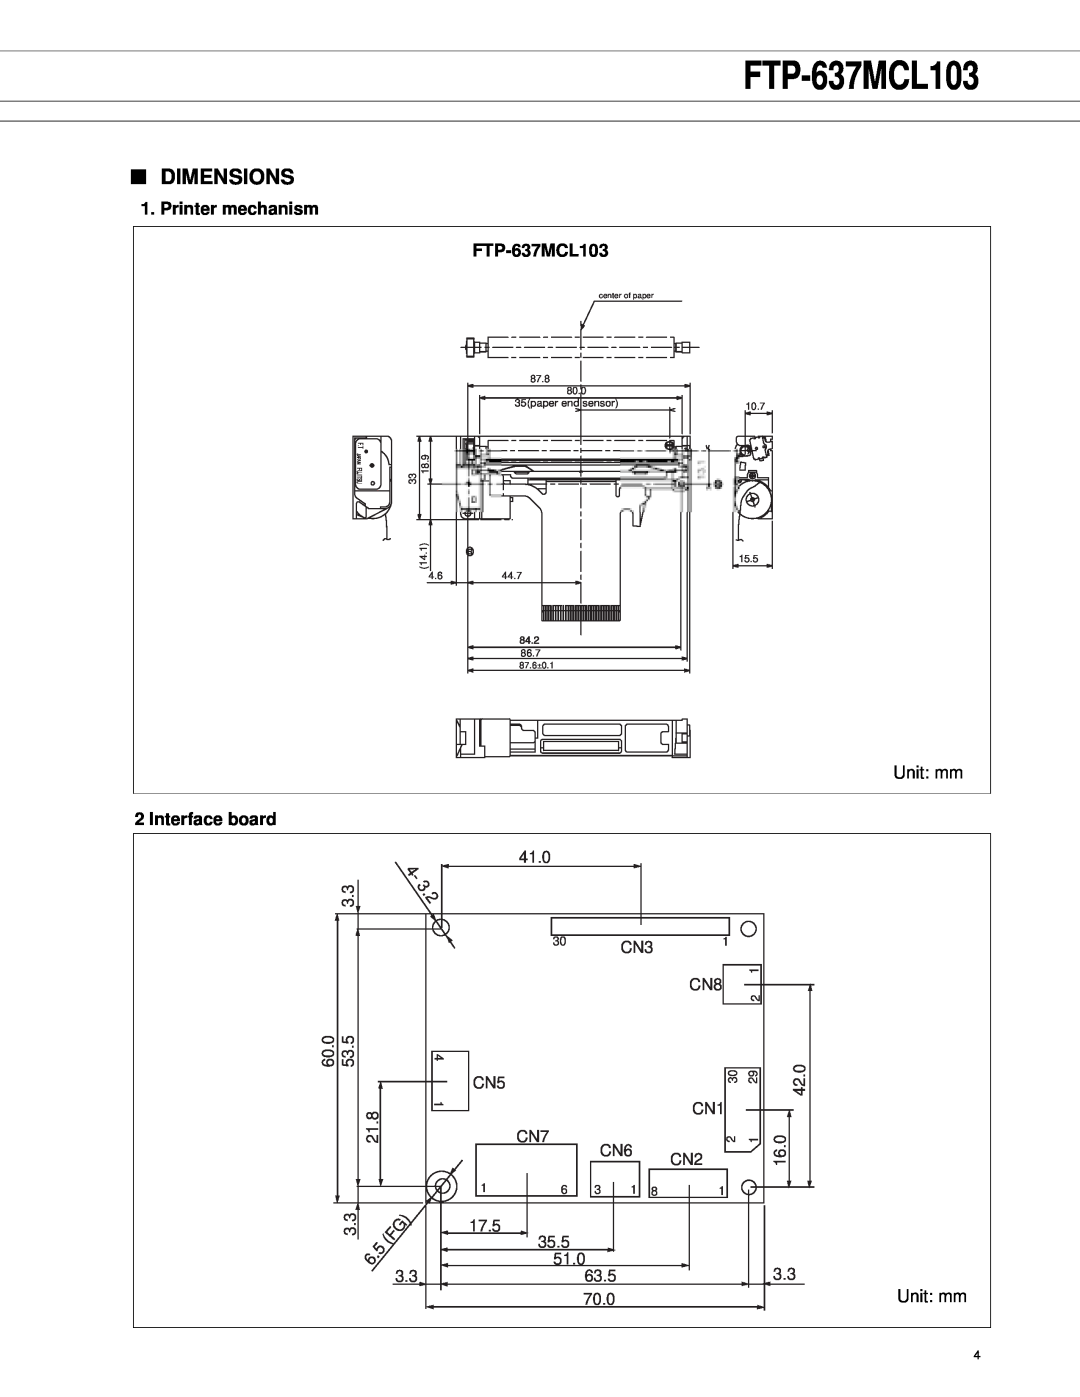 Fujitsu FTP-607 manual Dimensions, Printer mechanism, FTP-637MCL103, Interface board 